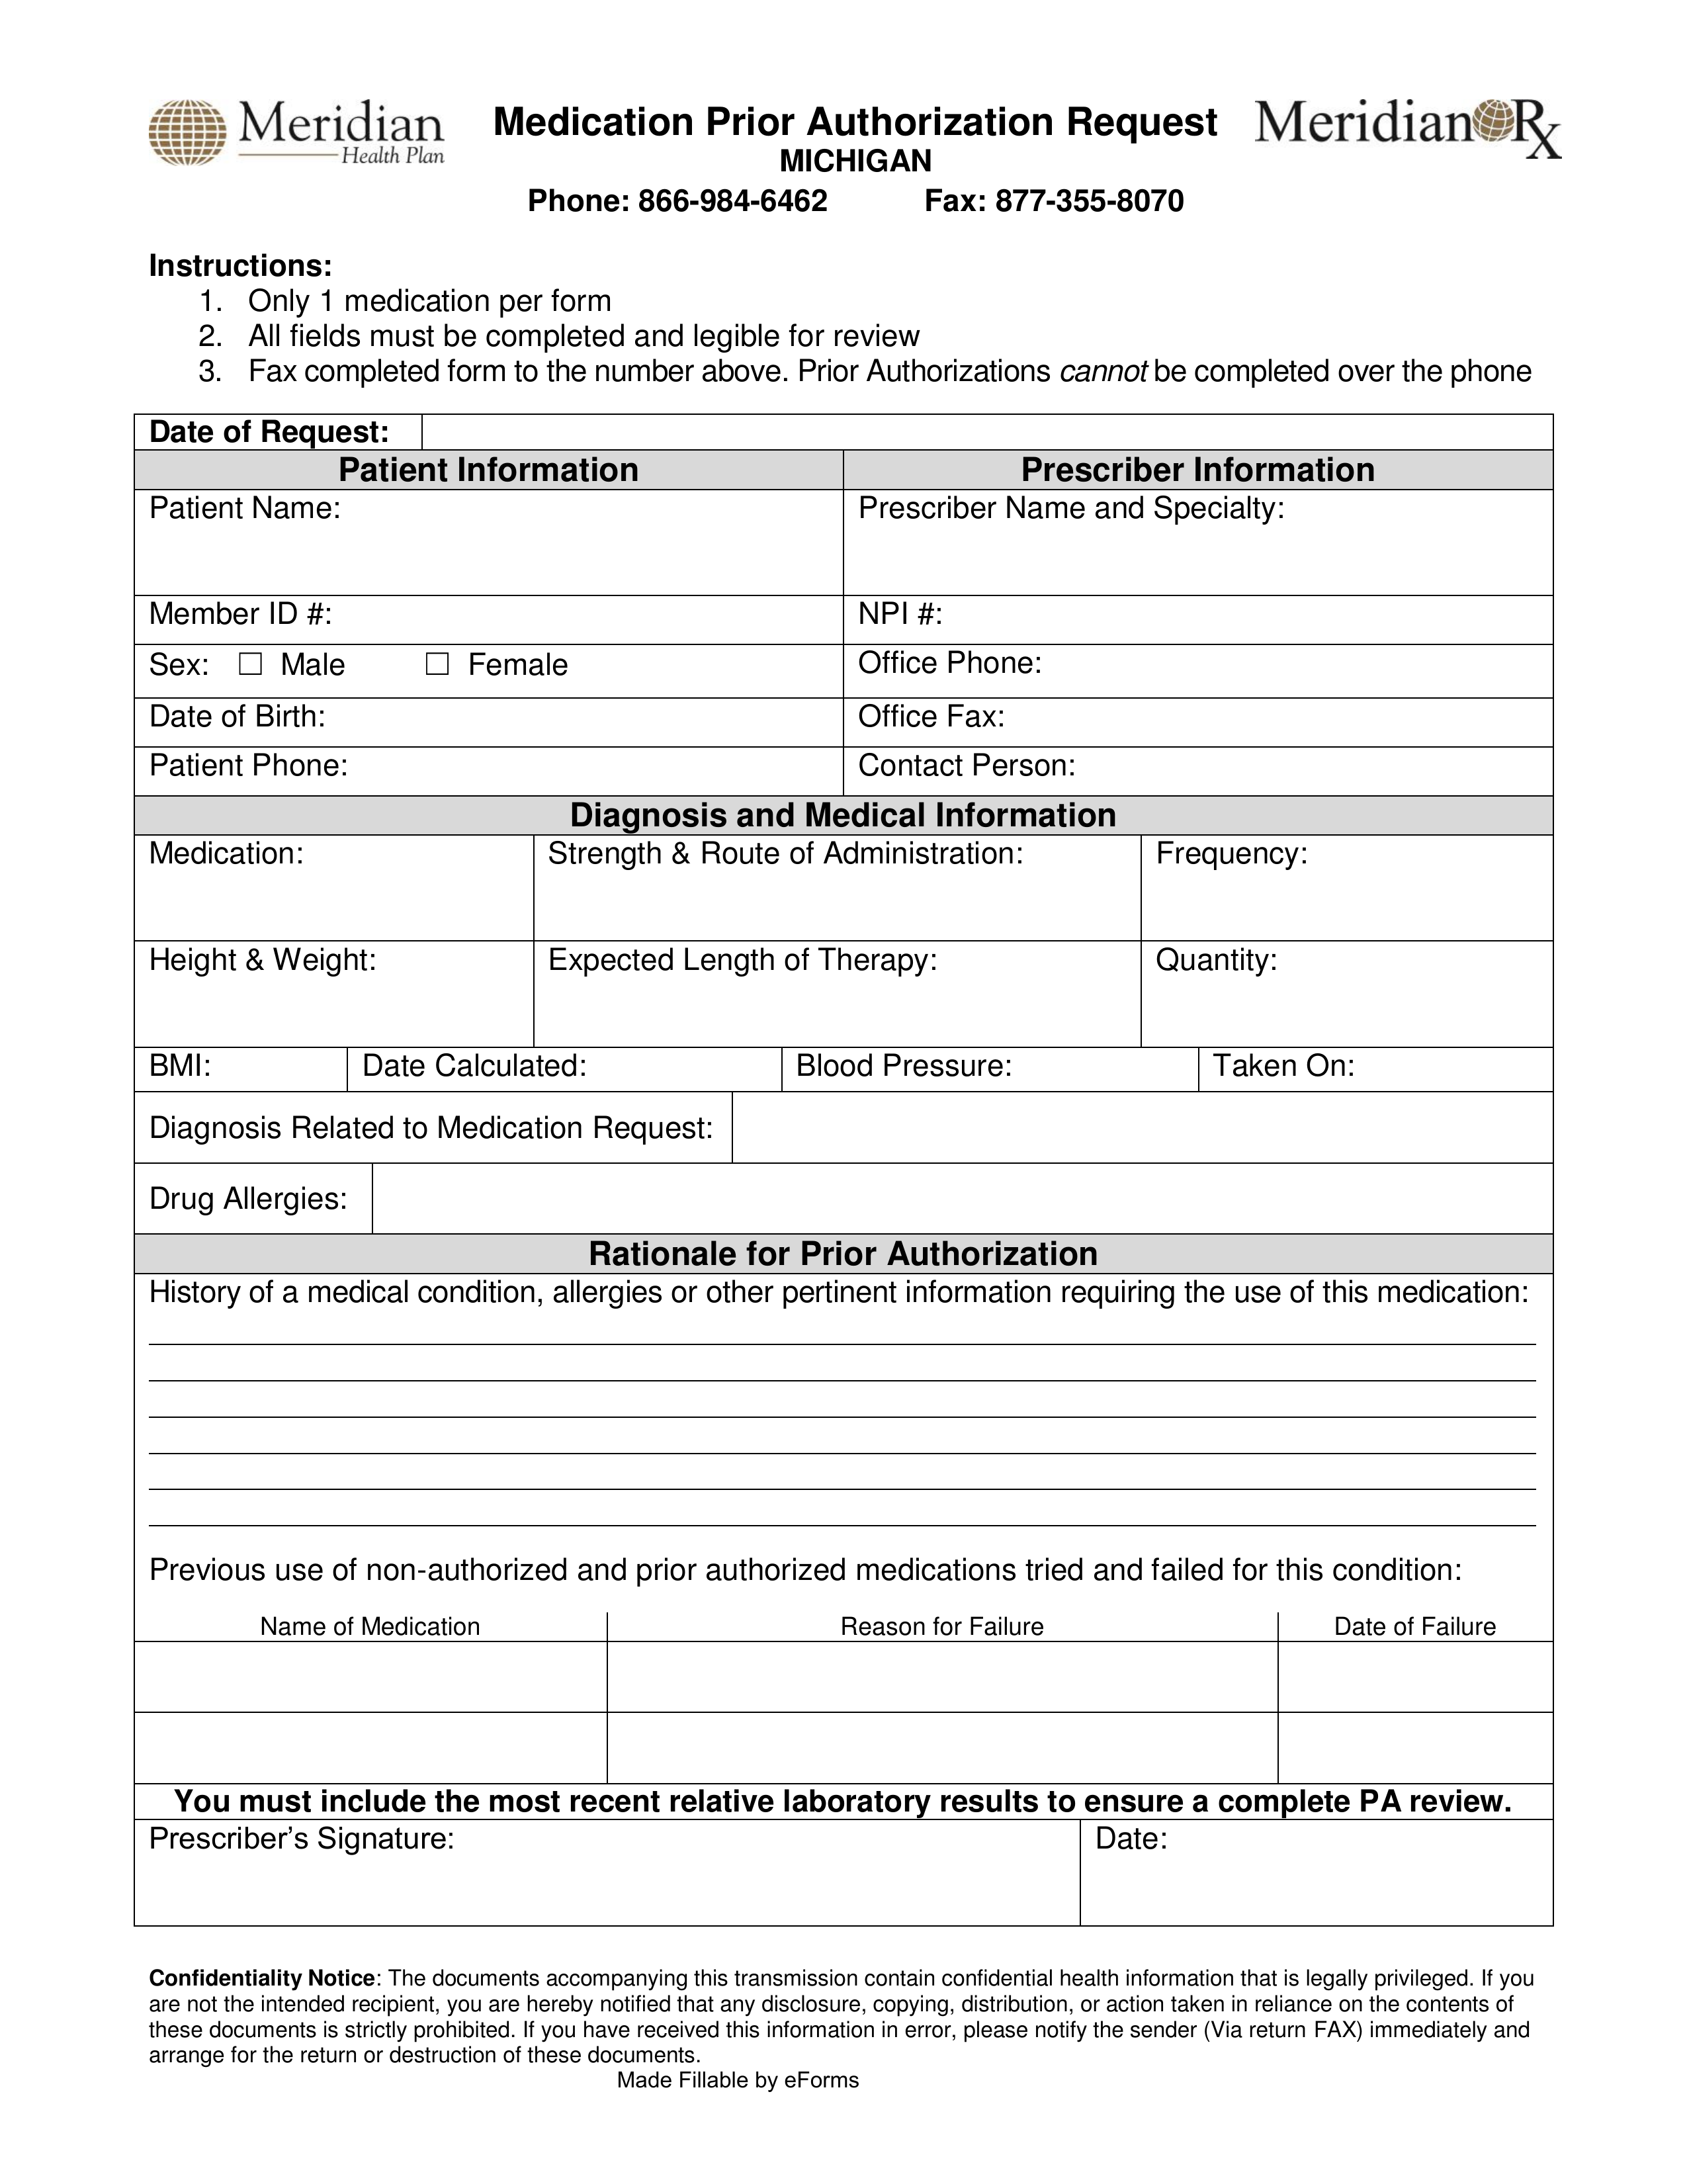 Meridian Prior (Rx) Authorization Form